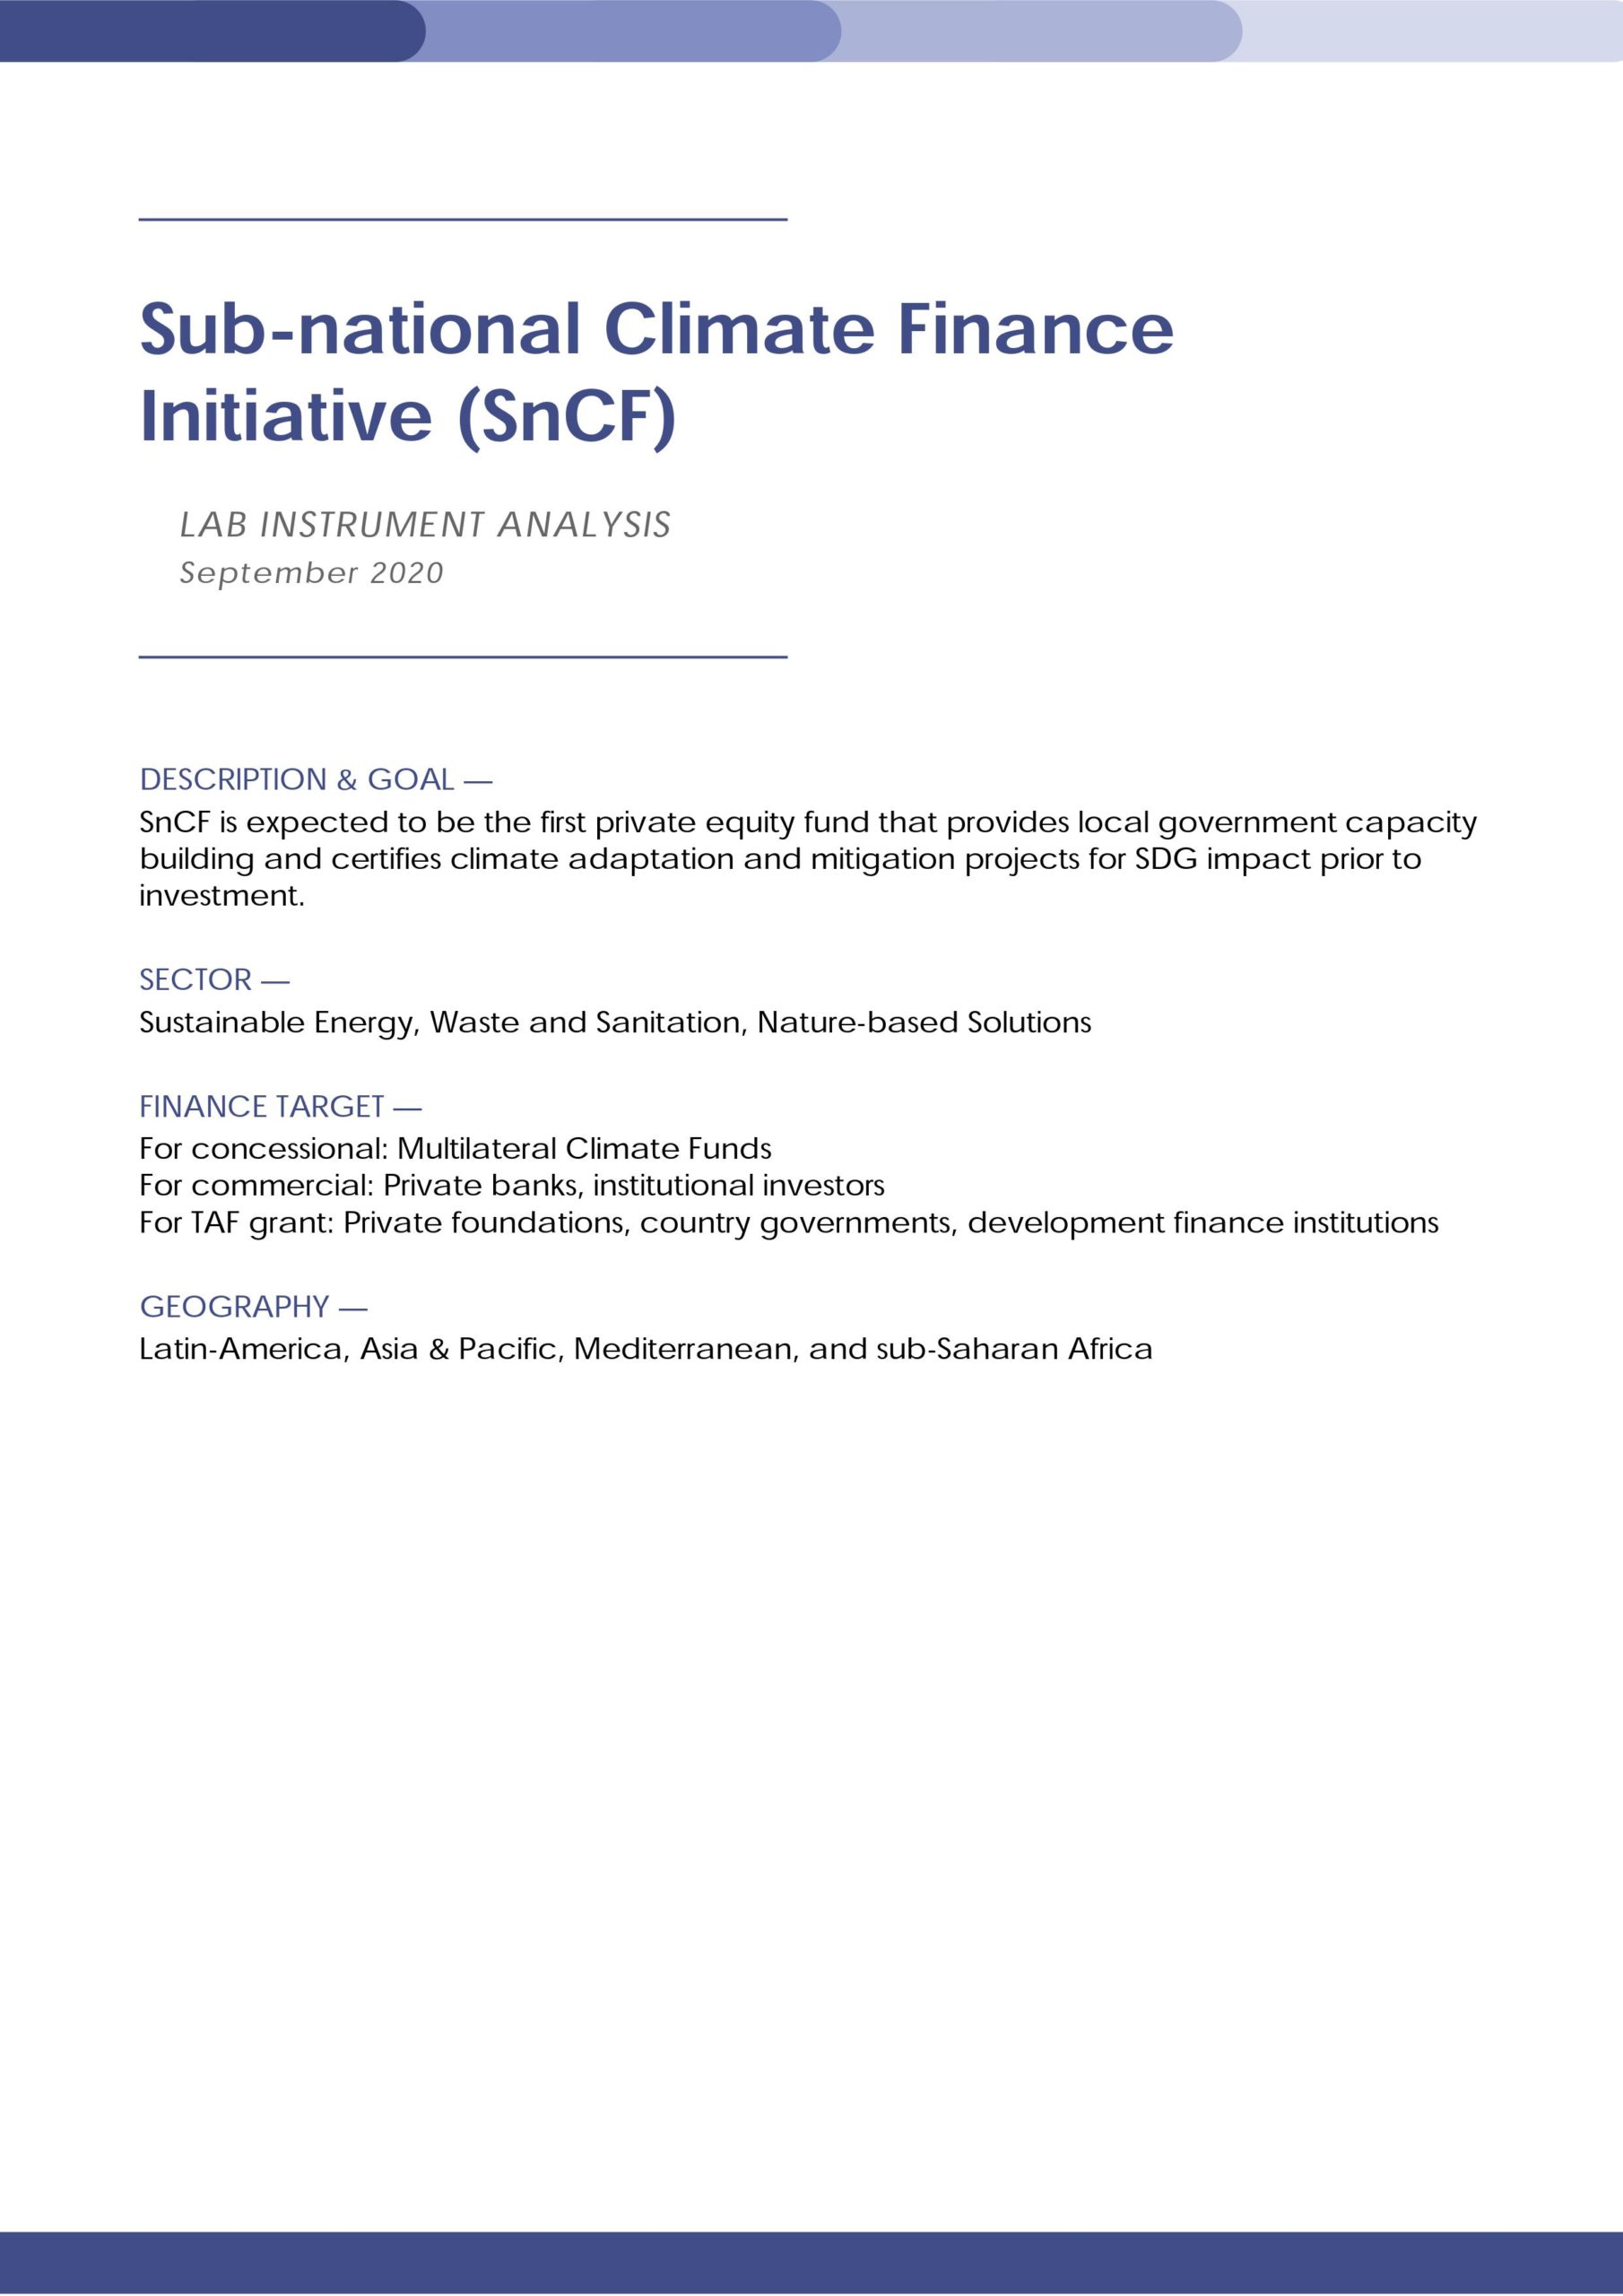 Sub National Climate Finance